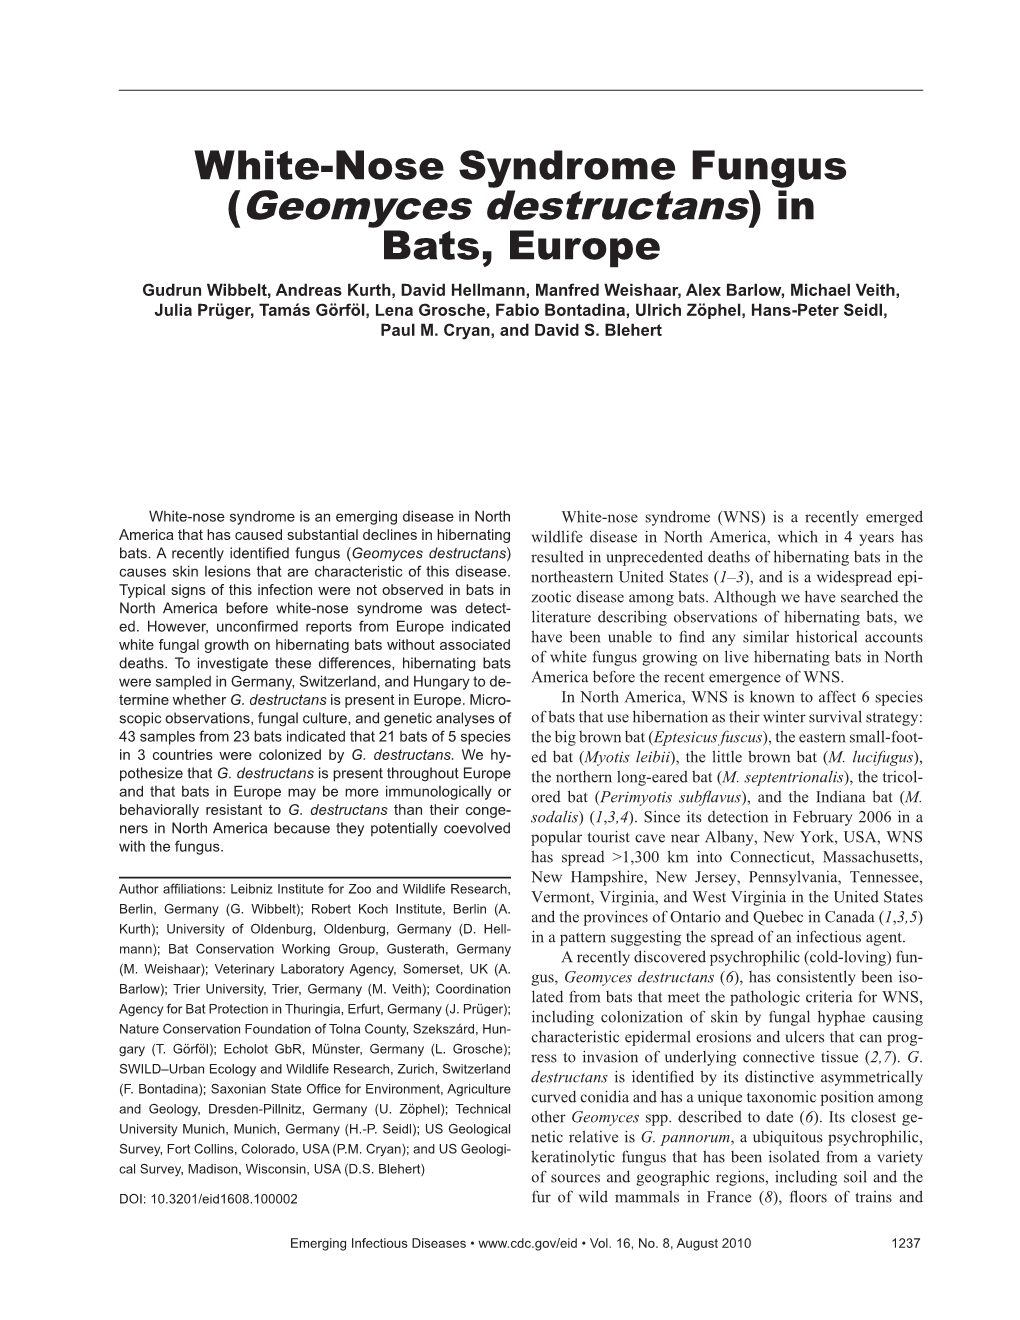 White-Nose Syndrome Fungus (Geomyces Destructans)